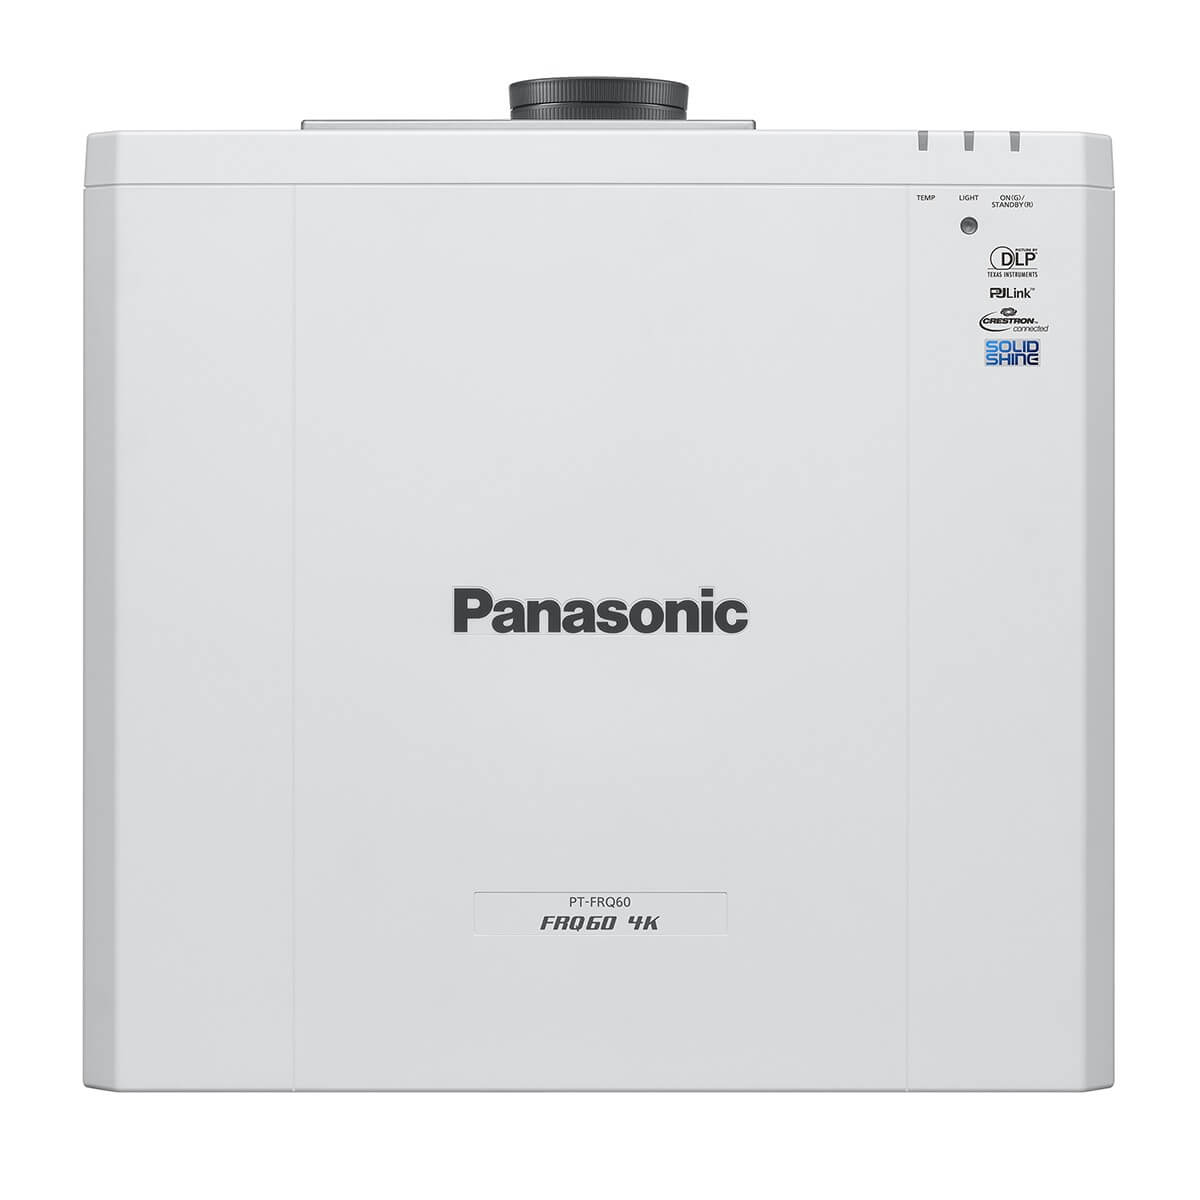 Panasonic PT-FRQ60 top